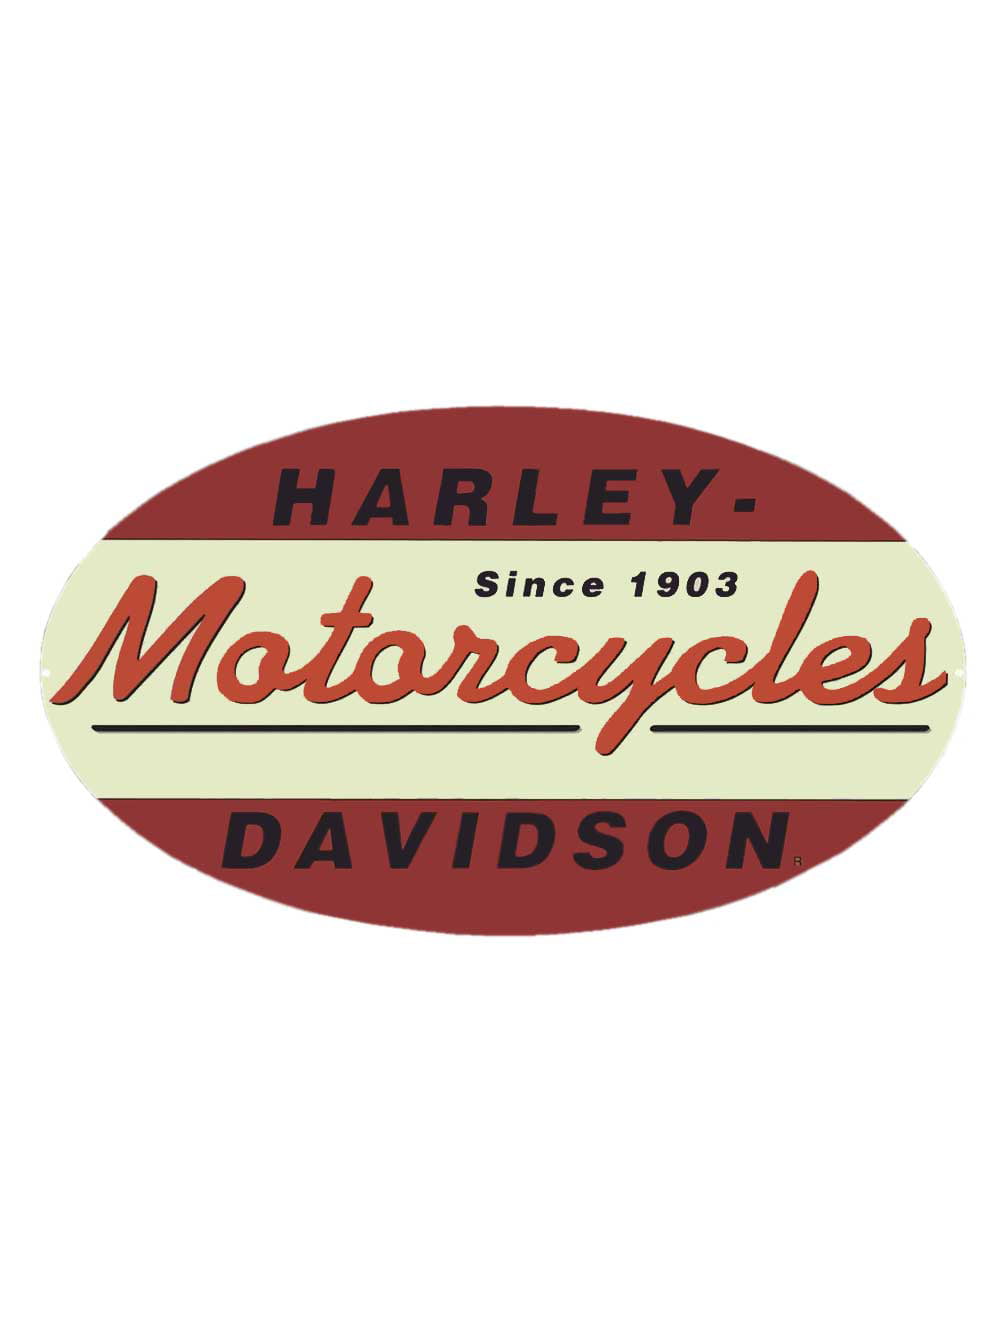 Harley Davidson Legendary Motercycle Since 1903 Sign Decor Bar Pub Home Biker 